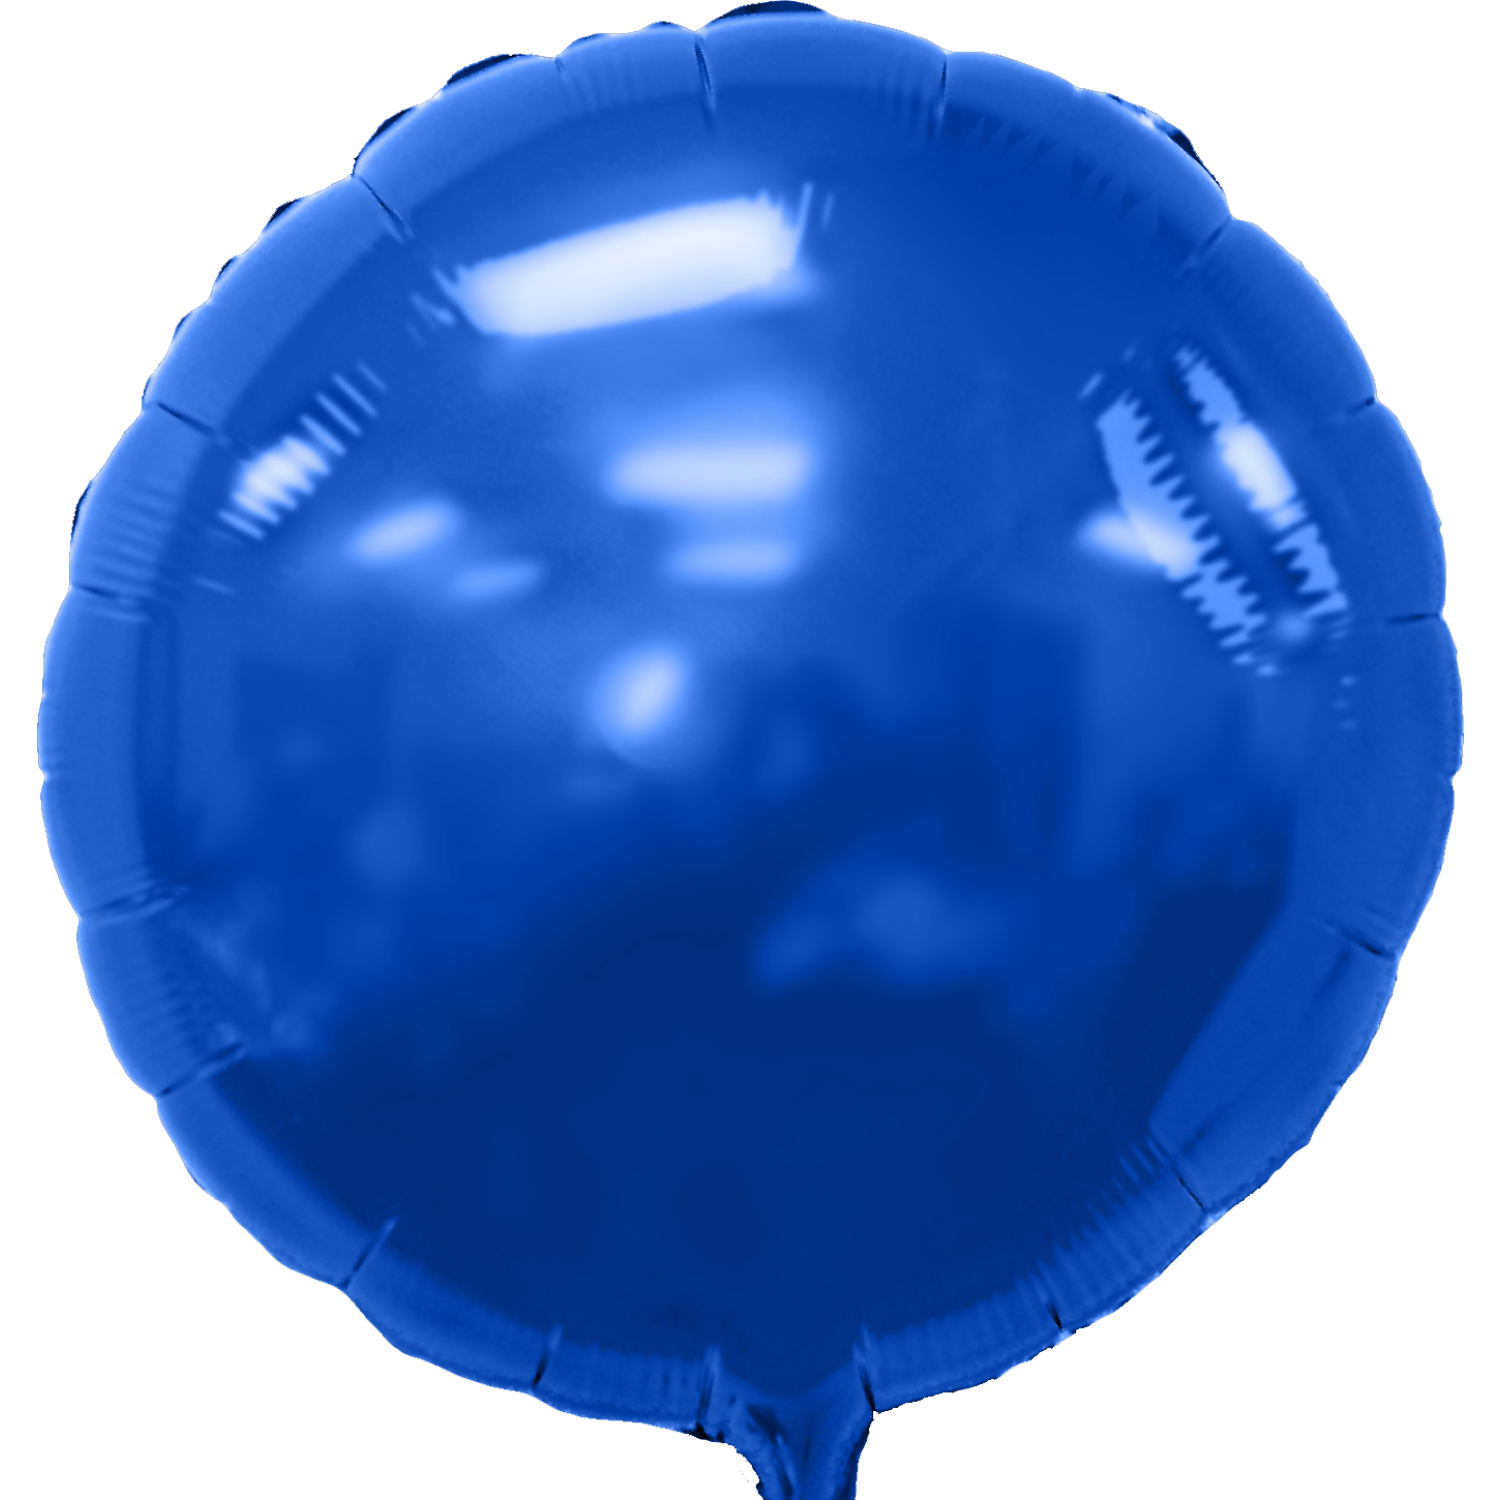 http://images.officebrain.com/migration-api-hidden-new/web/images/626/myrn-round-blue.png